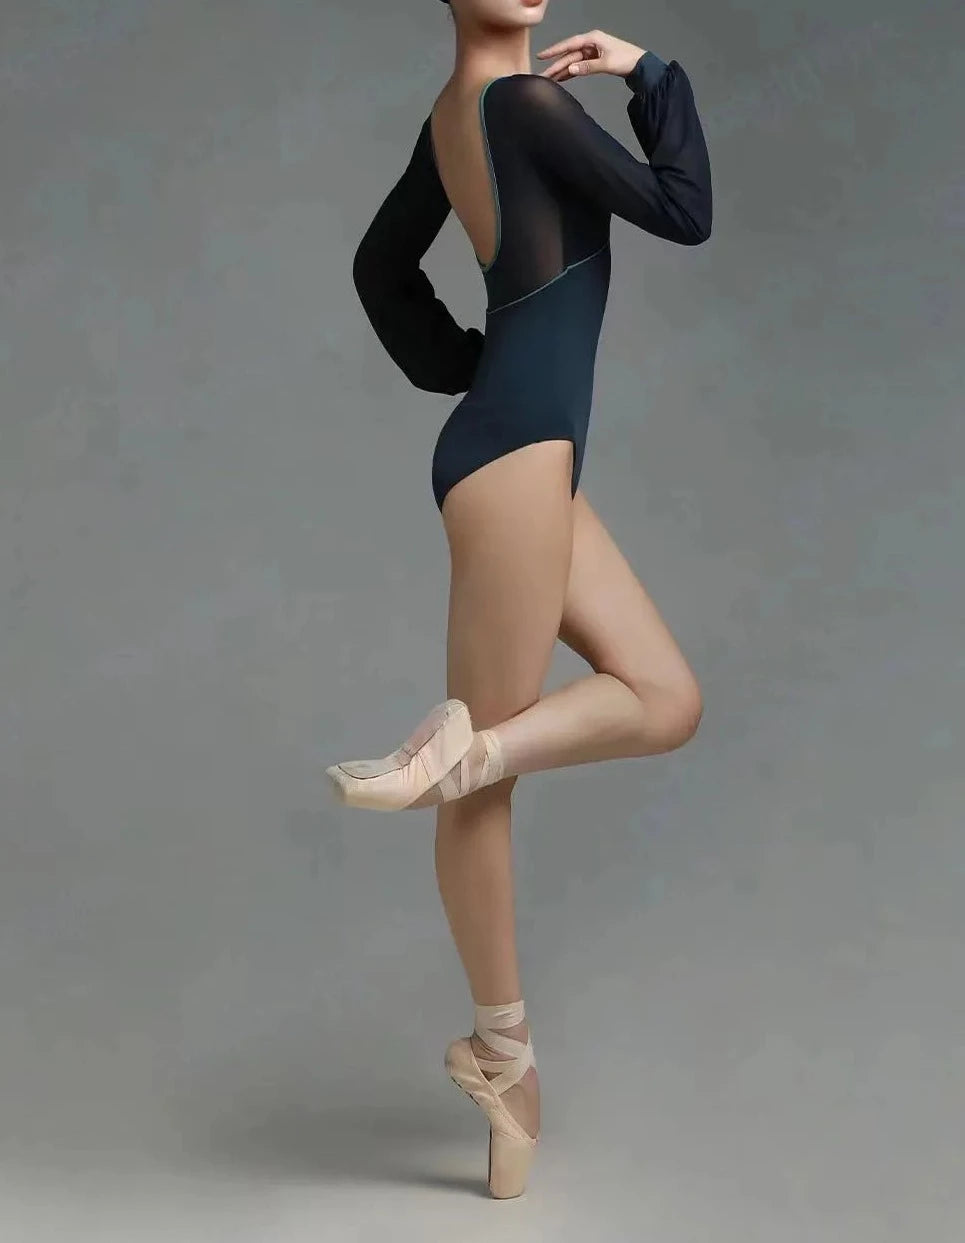 ballet dancer wearing a long sleeve black leotard